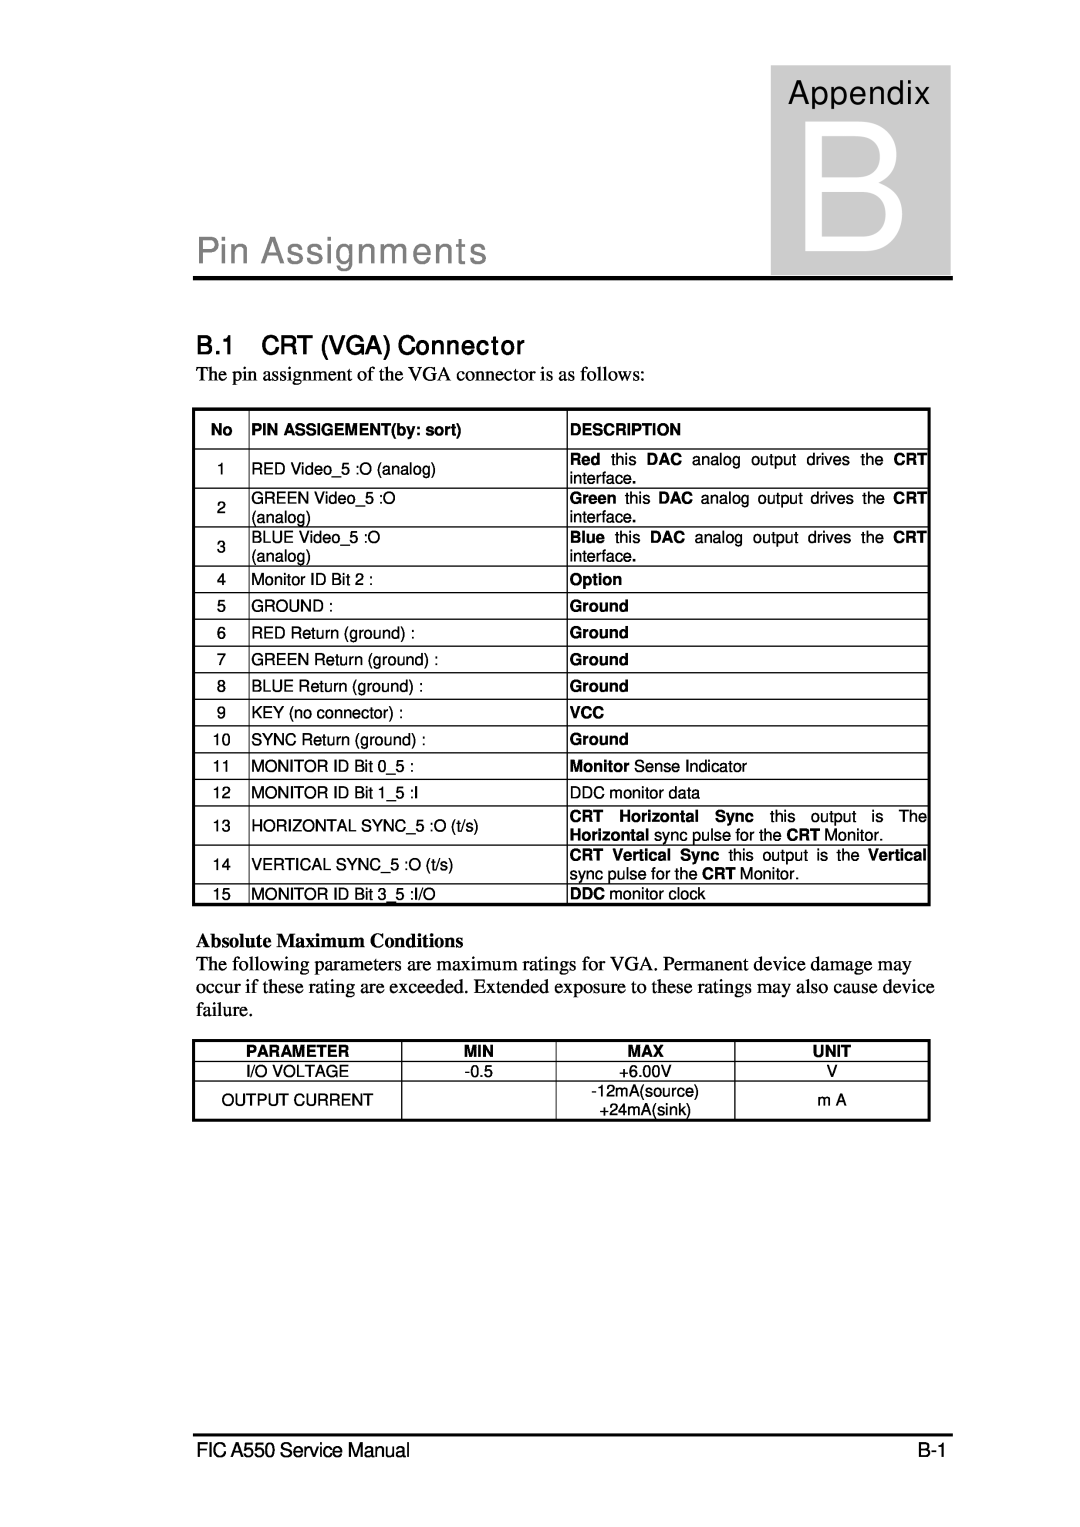 FIC A360 service manual Pin Assignments, AppendixB, CRT VGA Connector, Absolute Maximum Conditions, FIC A550 Service Manual 